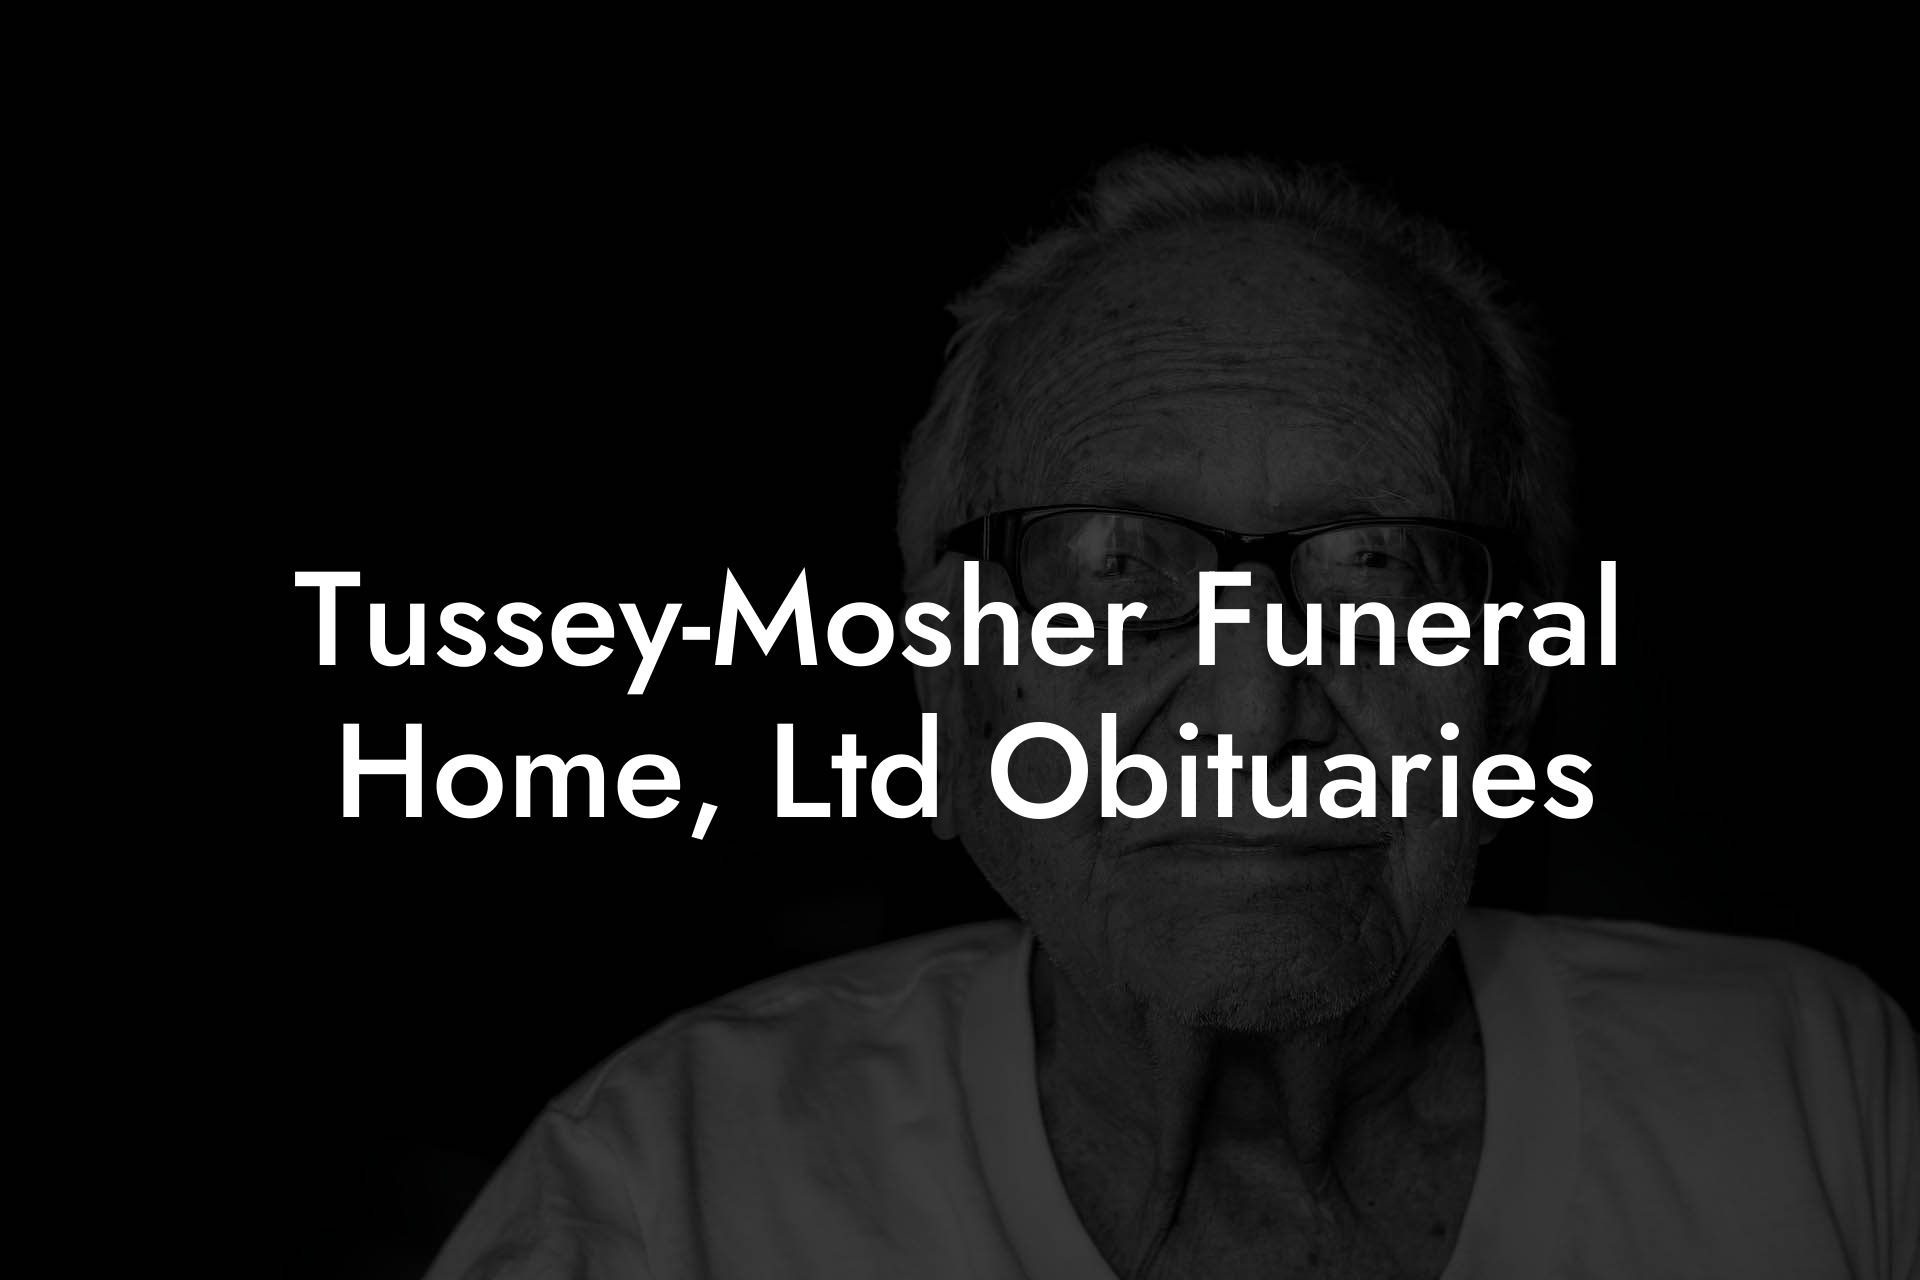 Tussey-Mosher Funeral Home, Ltd Obituaries